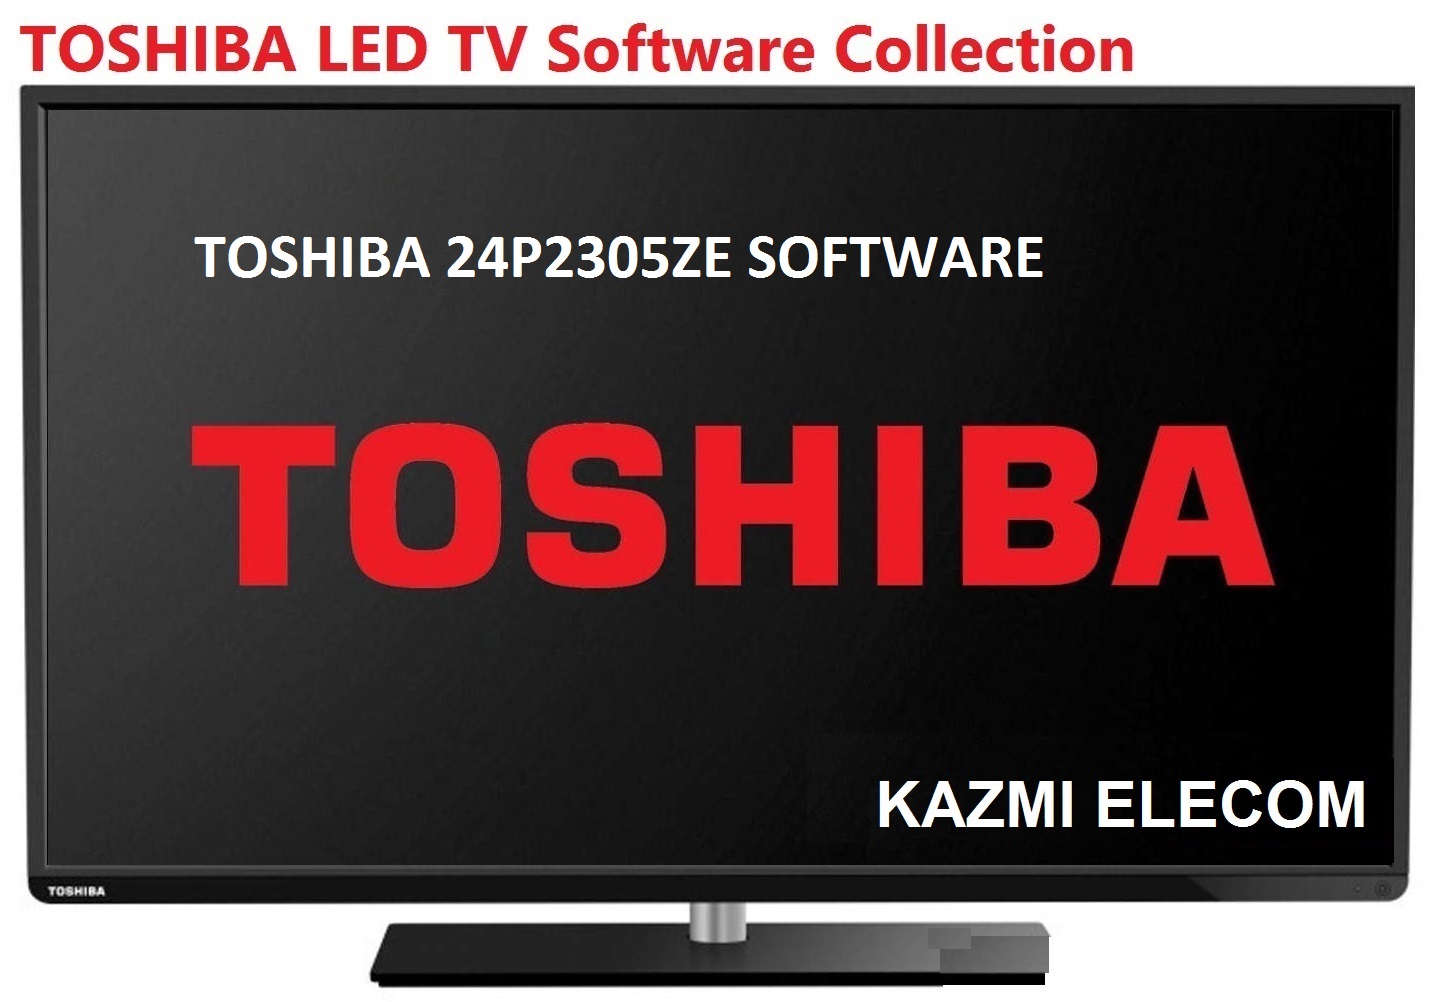 Toshiba 24P2305Ze